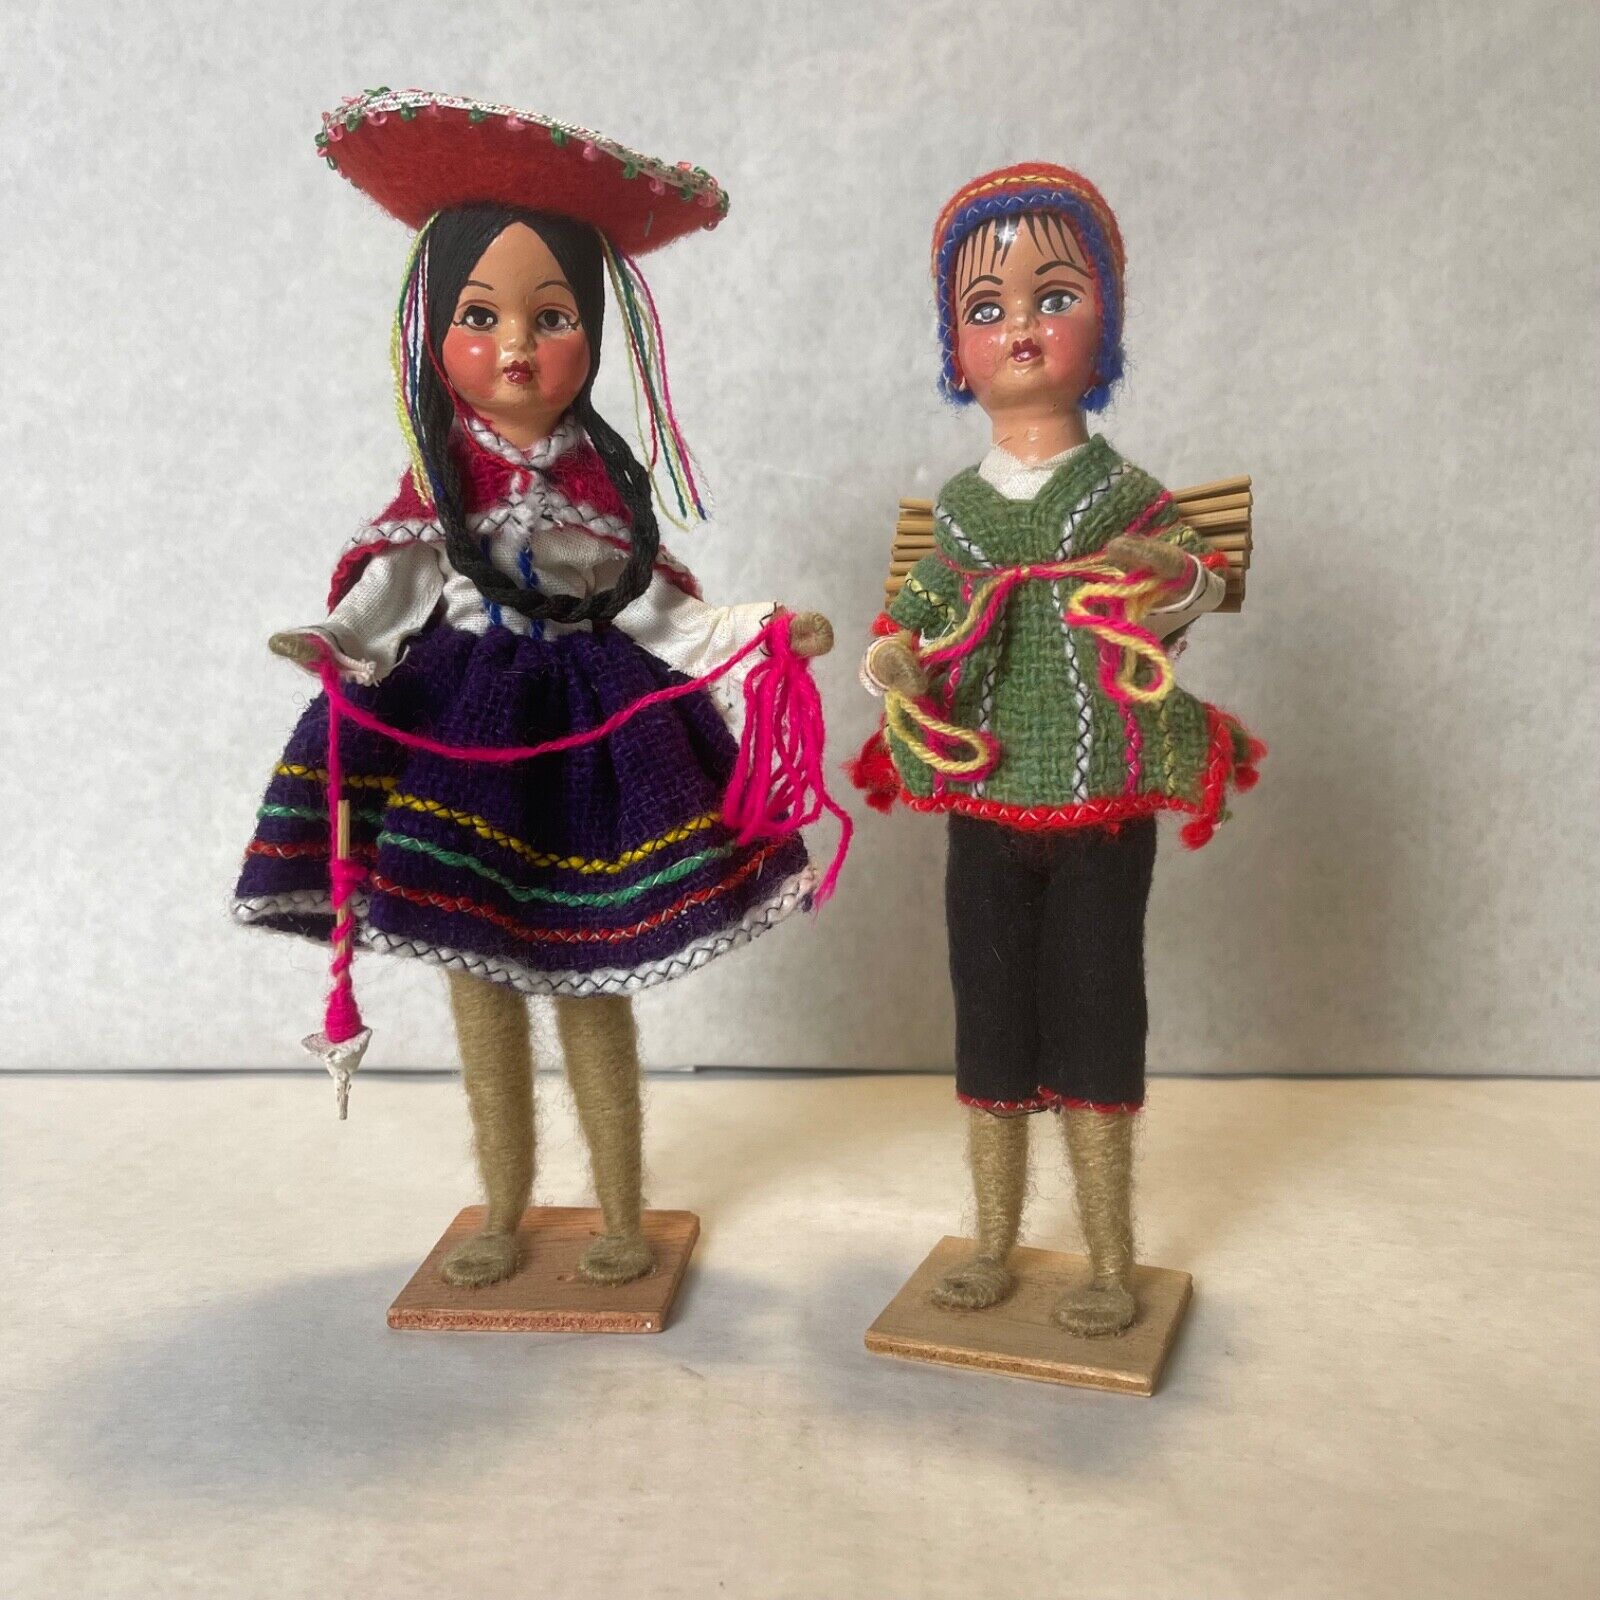 Two Peruvian Thread Dolls Folk Art Handmade Colorful Traditional Dress Girl Boy